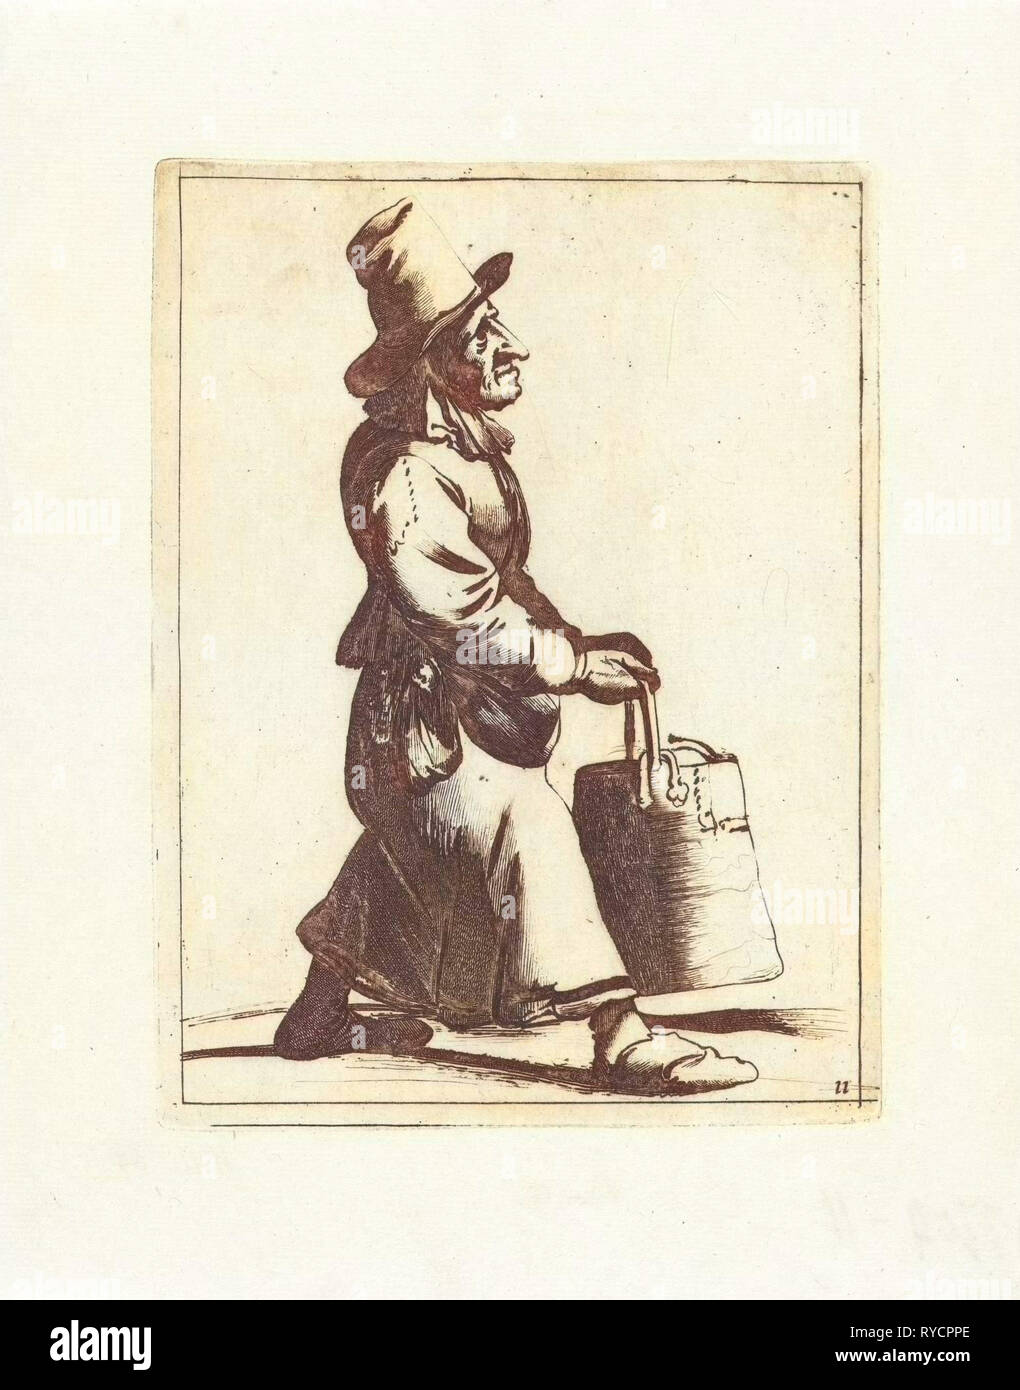 Man with bucket, Pieter Jansz. Quast, Frederik de Wit, 1639 - 1706 Stock Photo